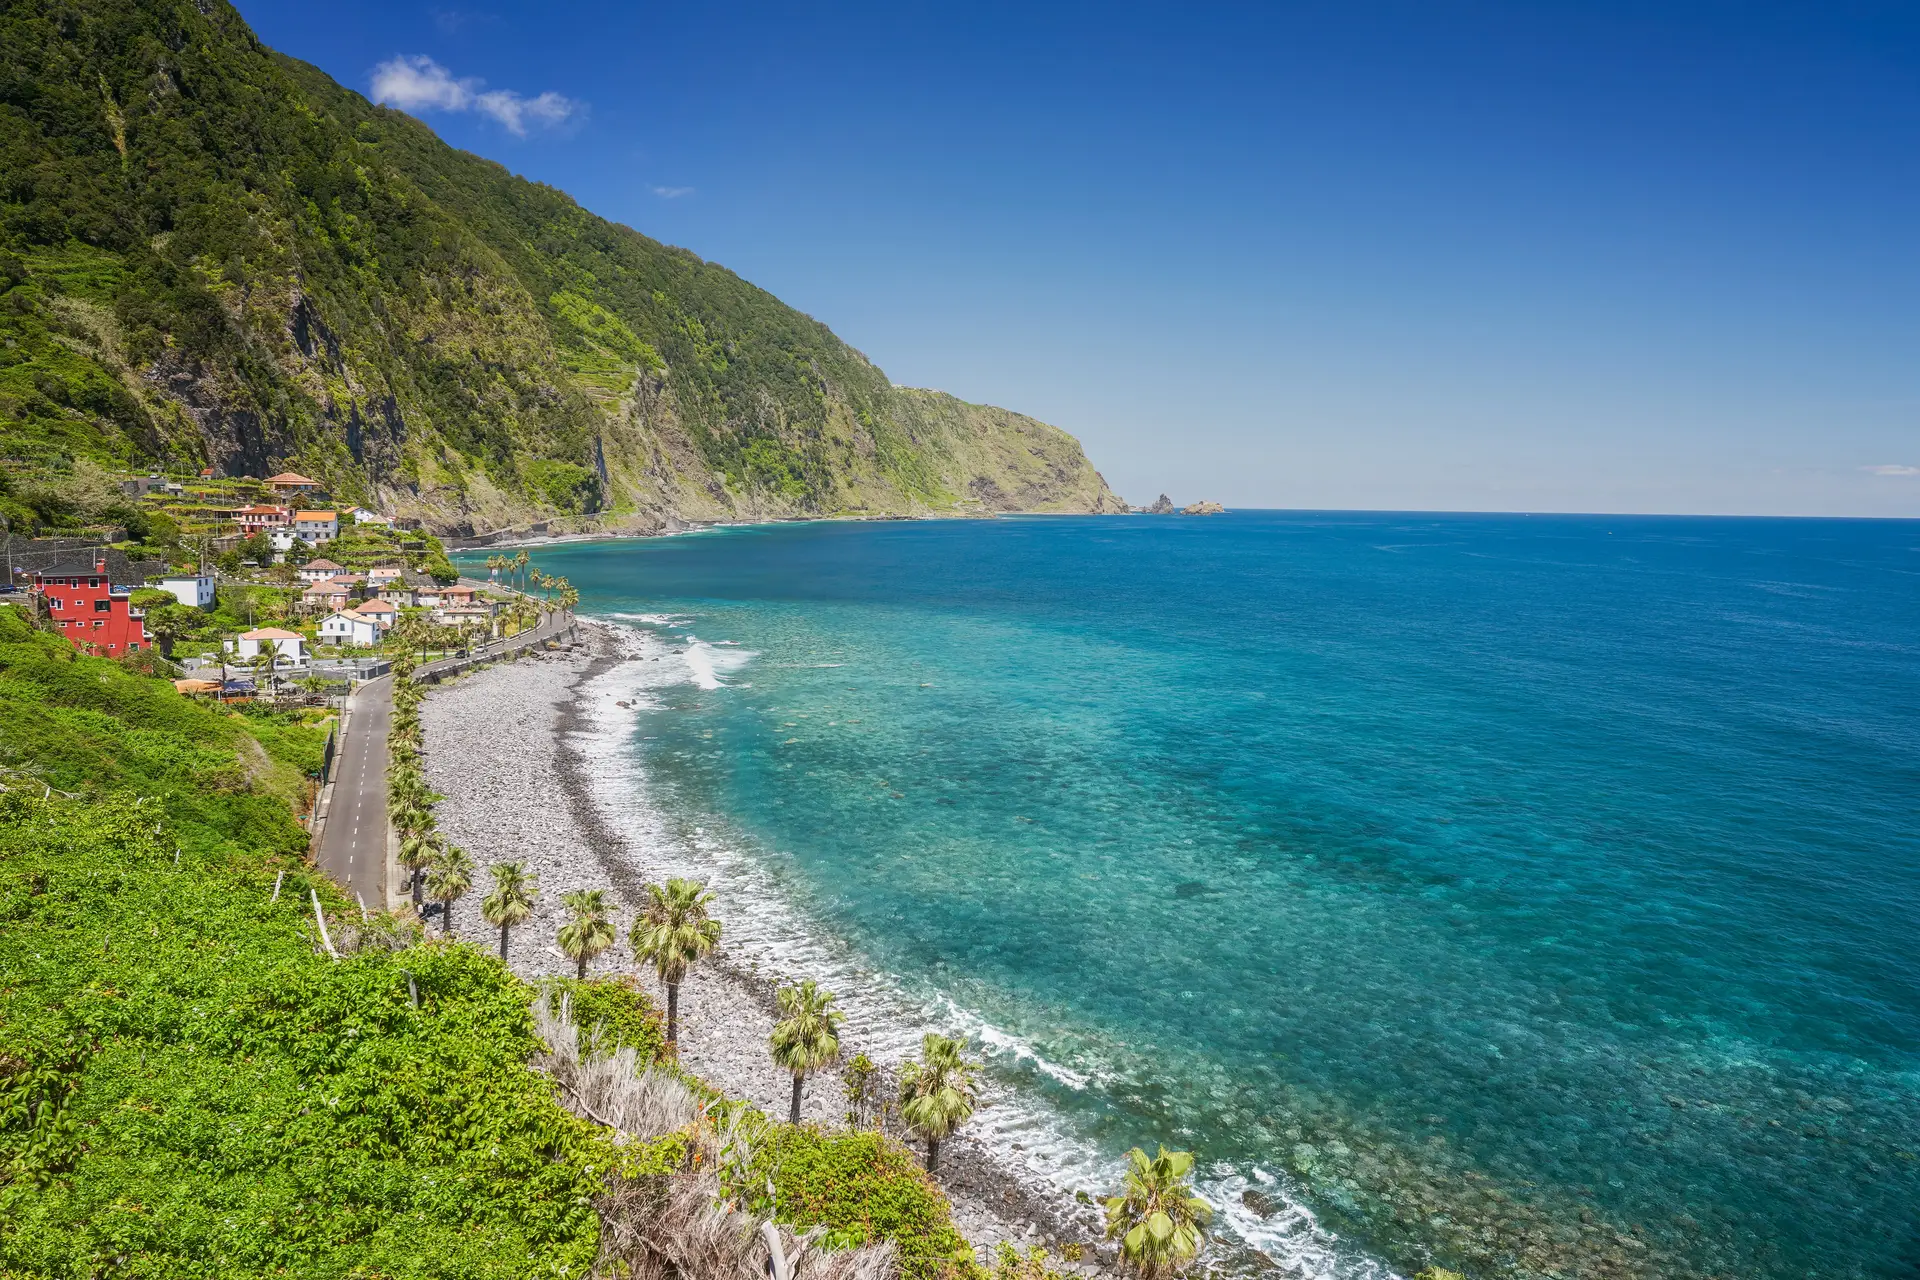 Complexo balnear da Laje ou praia da Jamaica, na Madeira